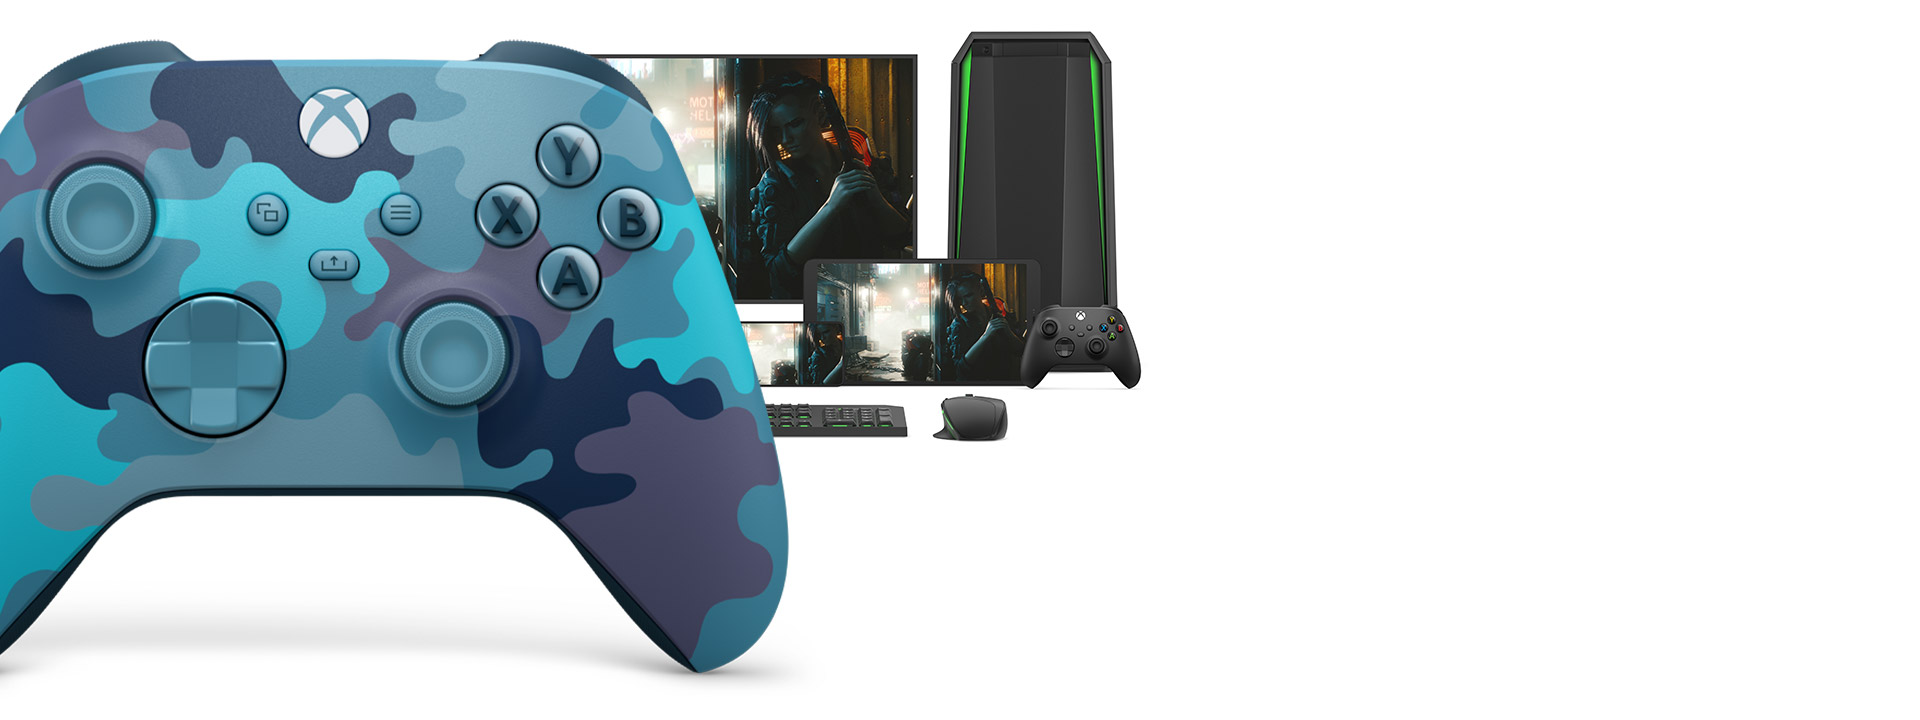 Xbox Wireless Controller – Mineral Camo Special Edition vor einem Computer, Monitor, Tablet, Telefon, Xbox Wireless Controller, Maus und Tastatur